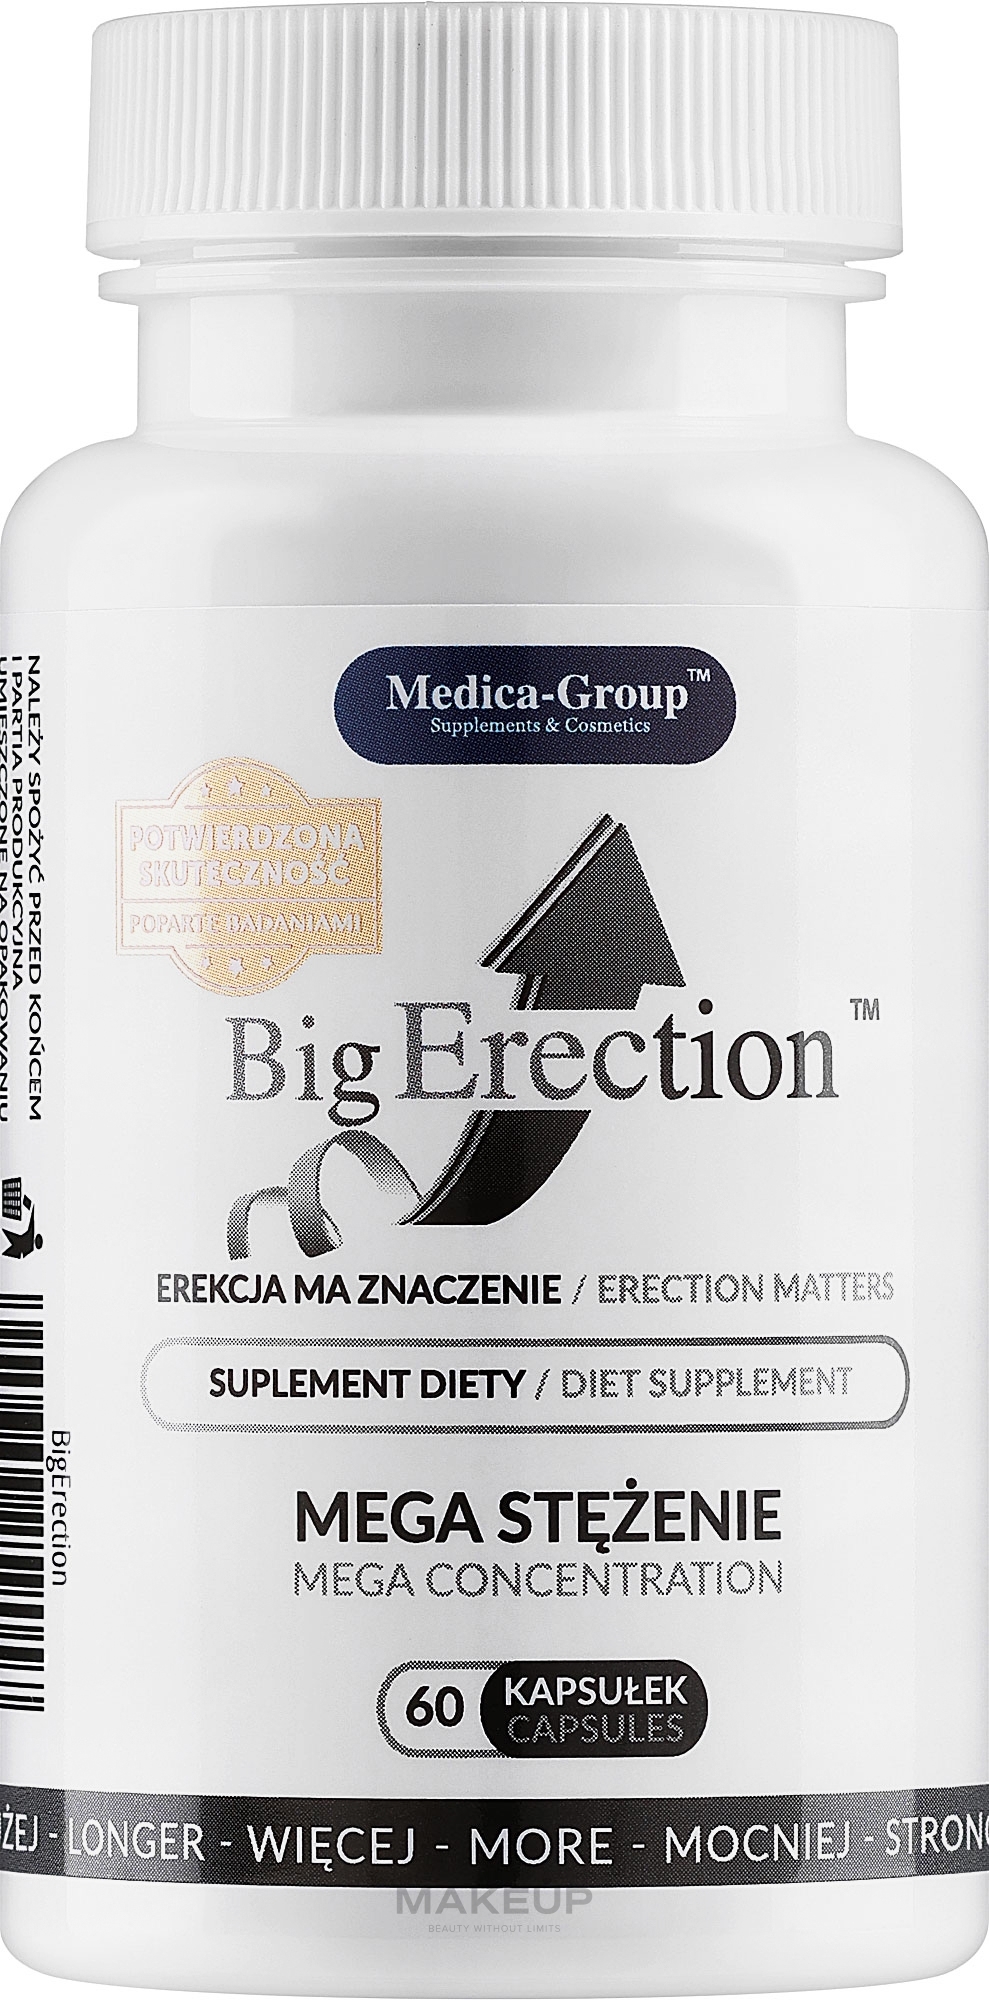 Suplement diety na mocną i długą erekcję - Medica-Group Big Erection Diet Supplement — Zdjęcie 60 szt.